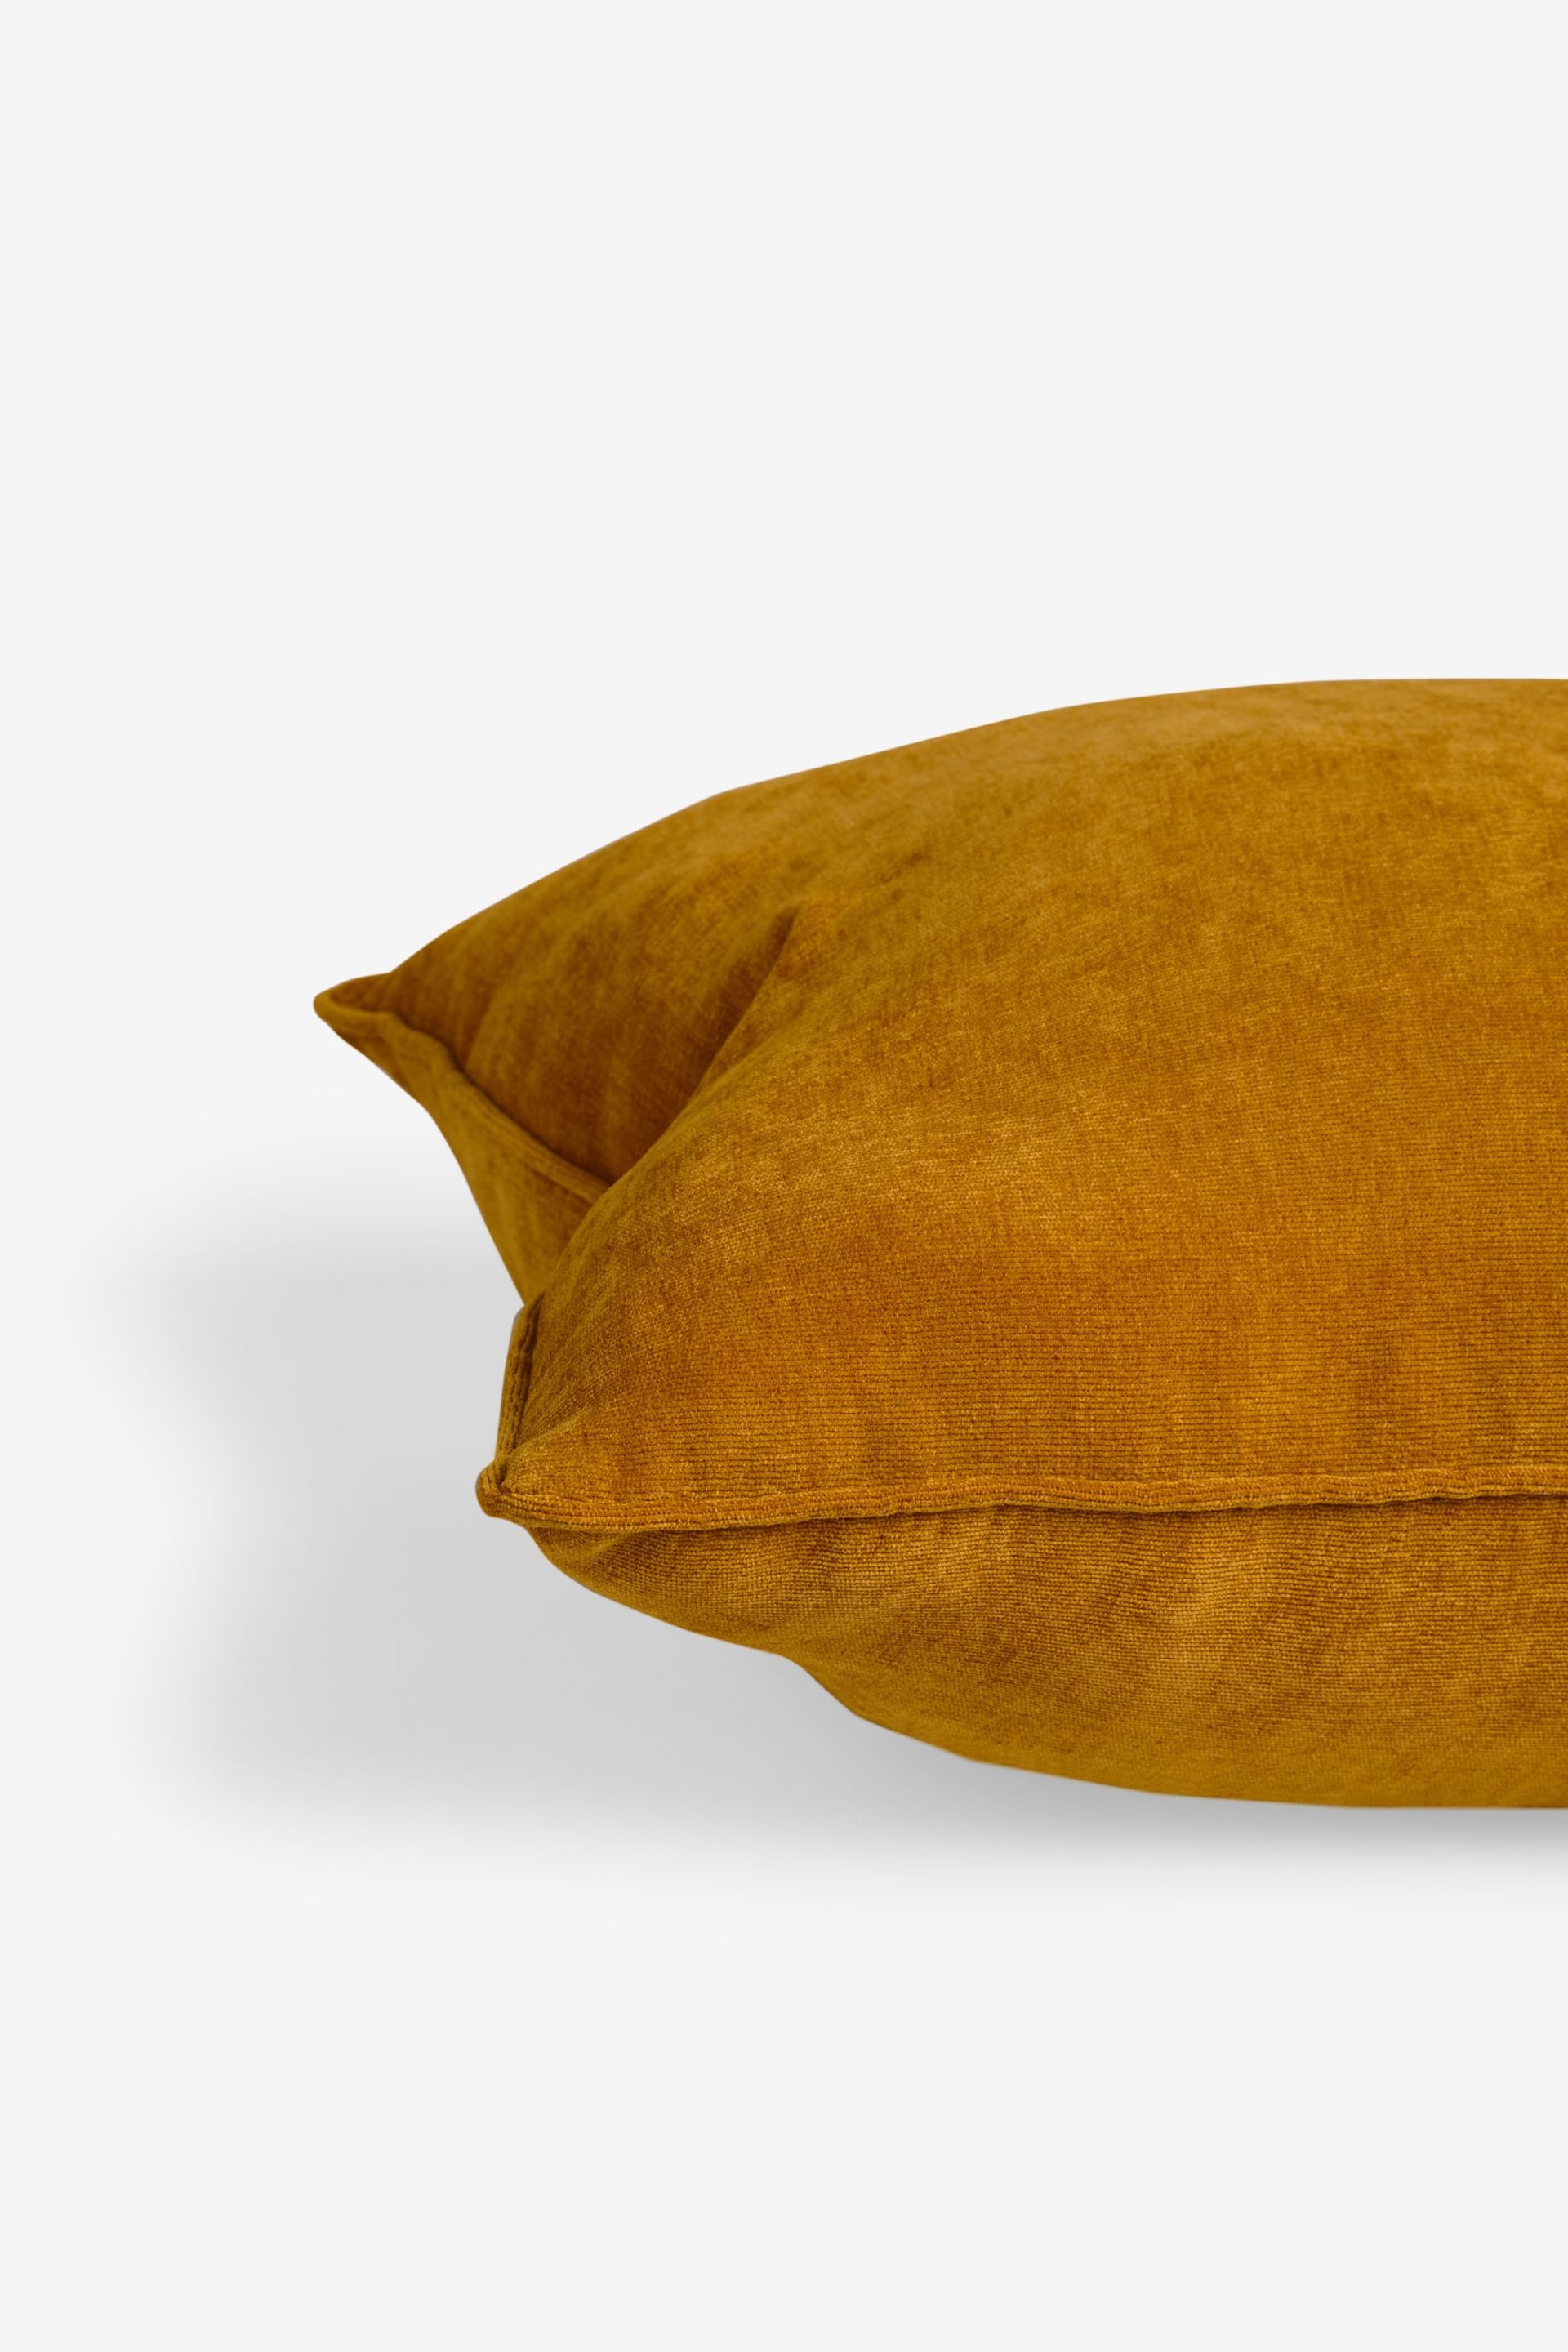 Ochre Yellow 40 x 59cm Soft velour Cushion - Image 3 of 4